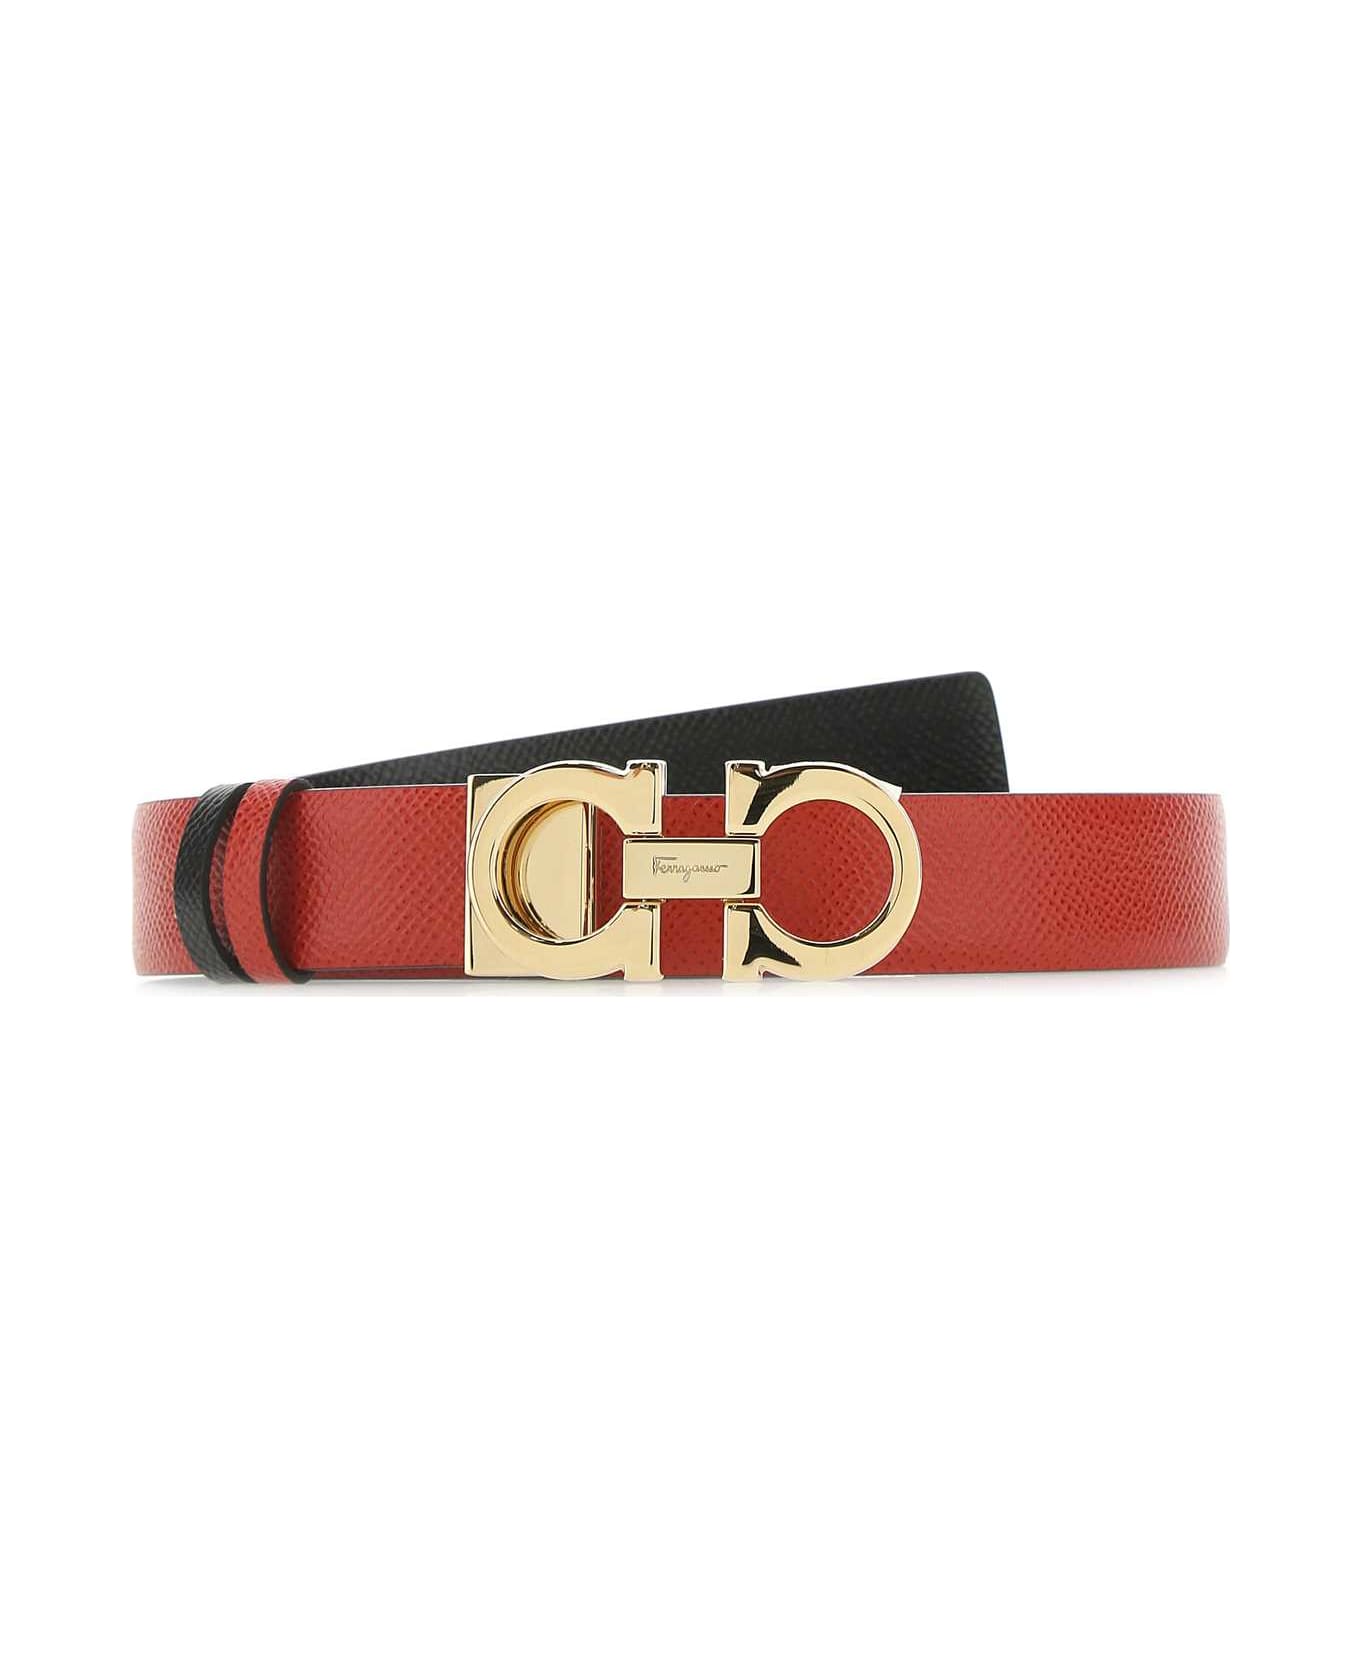 Ferragamo Red Leather Reversible Belt - LIPSTICK